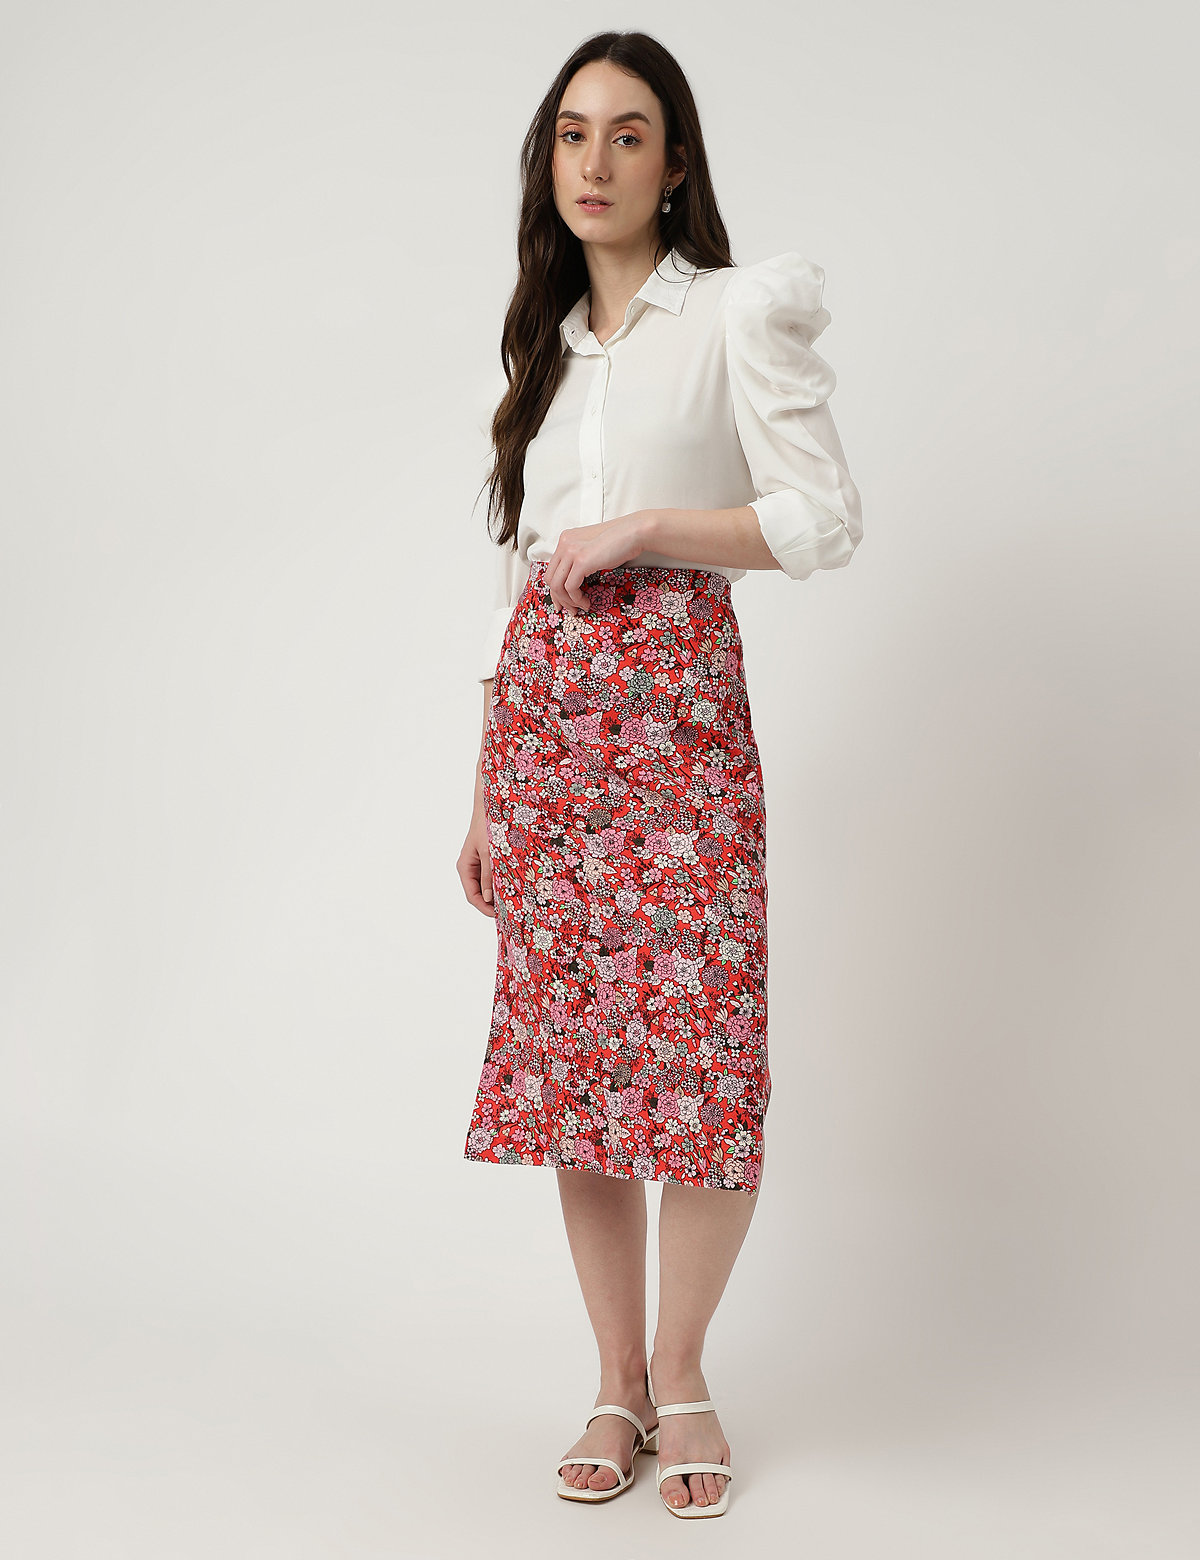 Linen Mix Floral Print Straight Fit Skirt